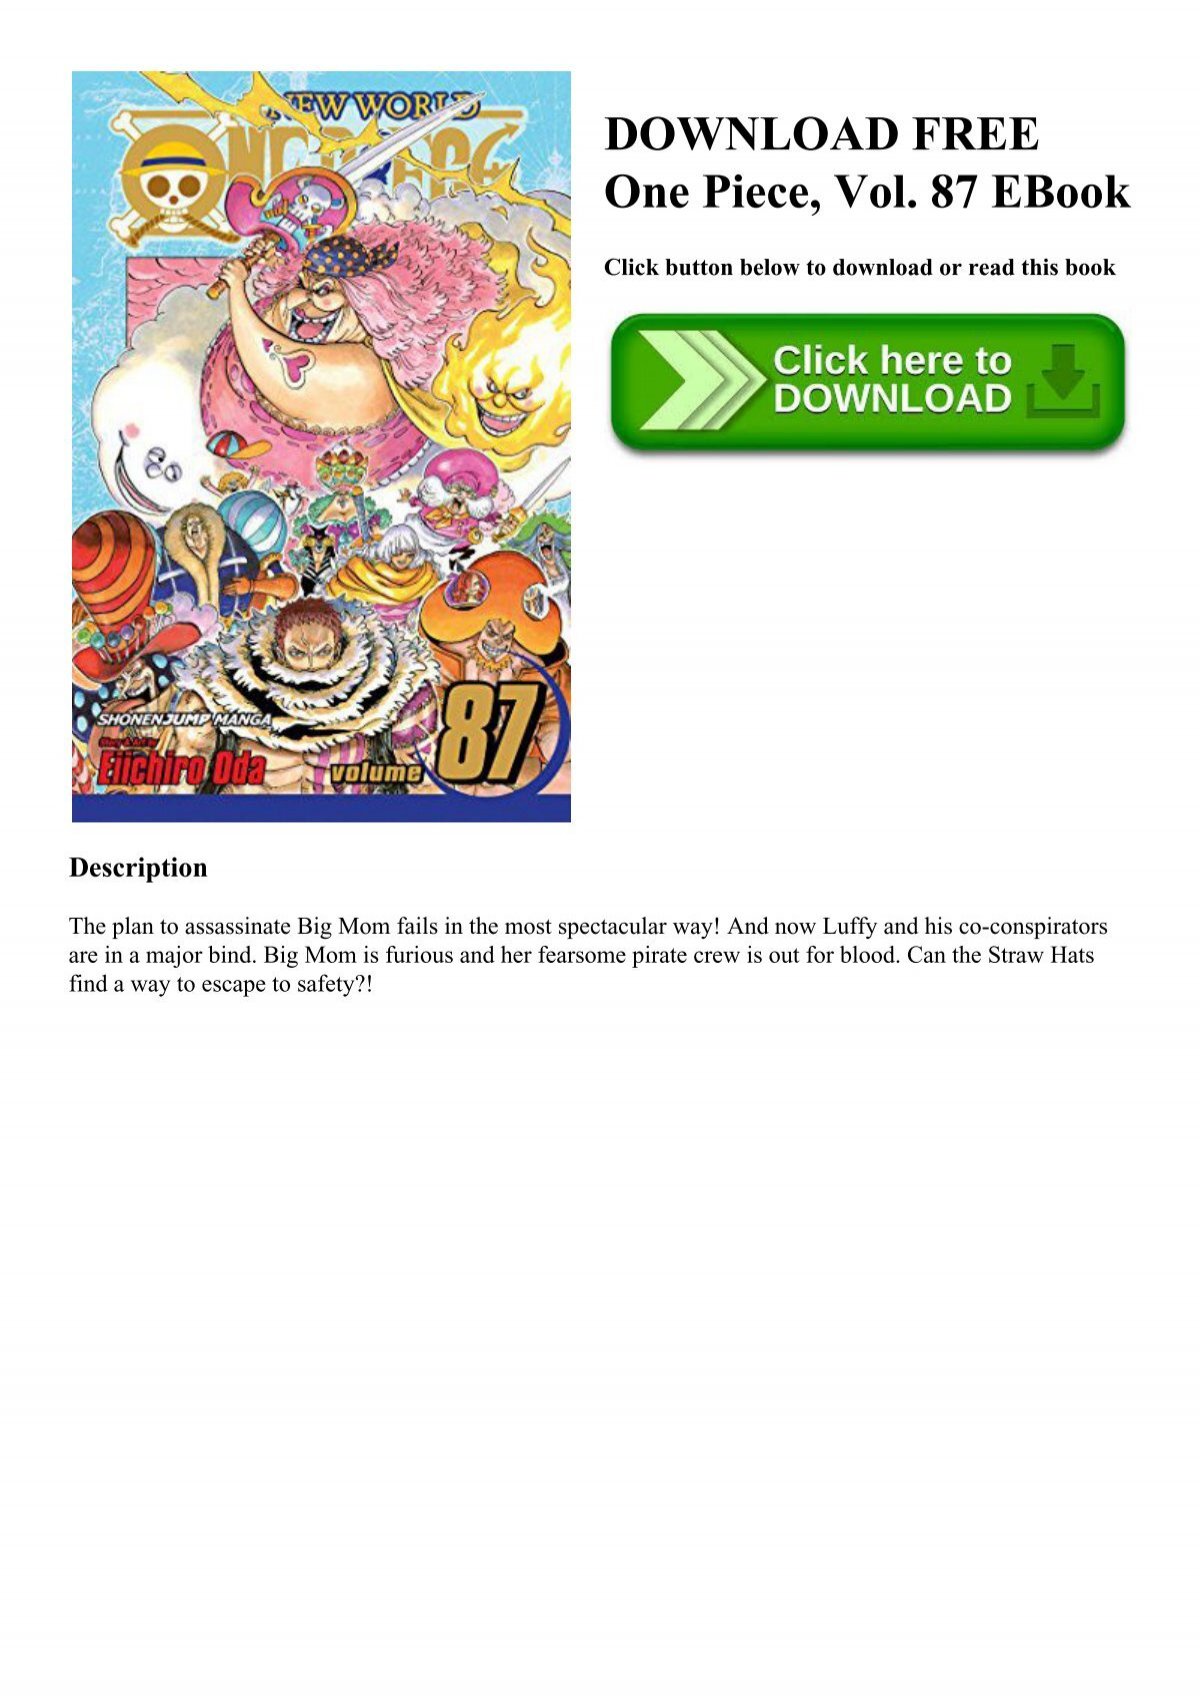 Download Free One Piece Vol 87 Ebook